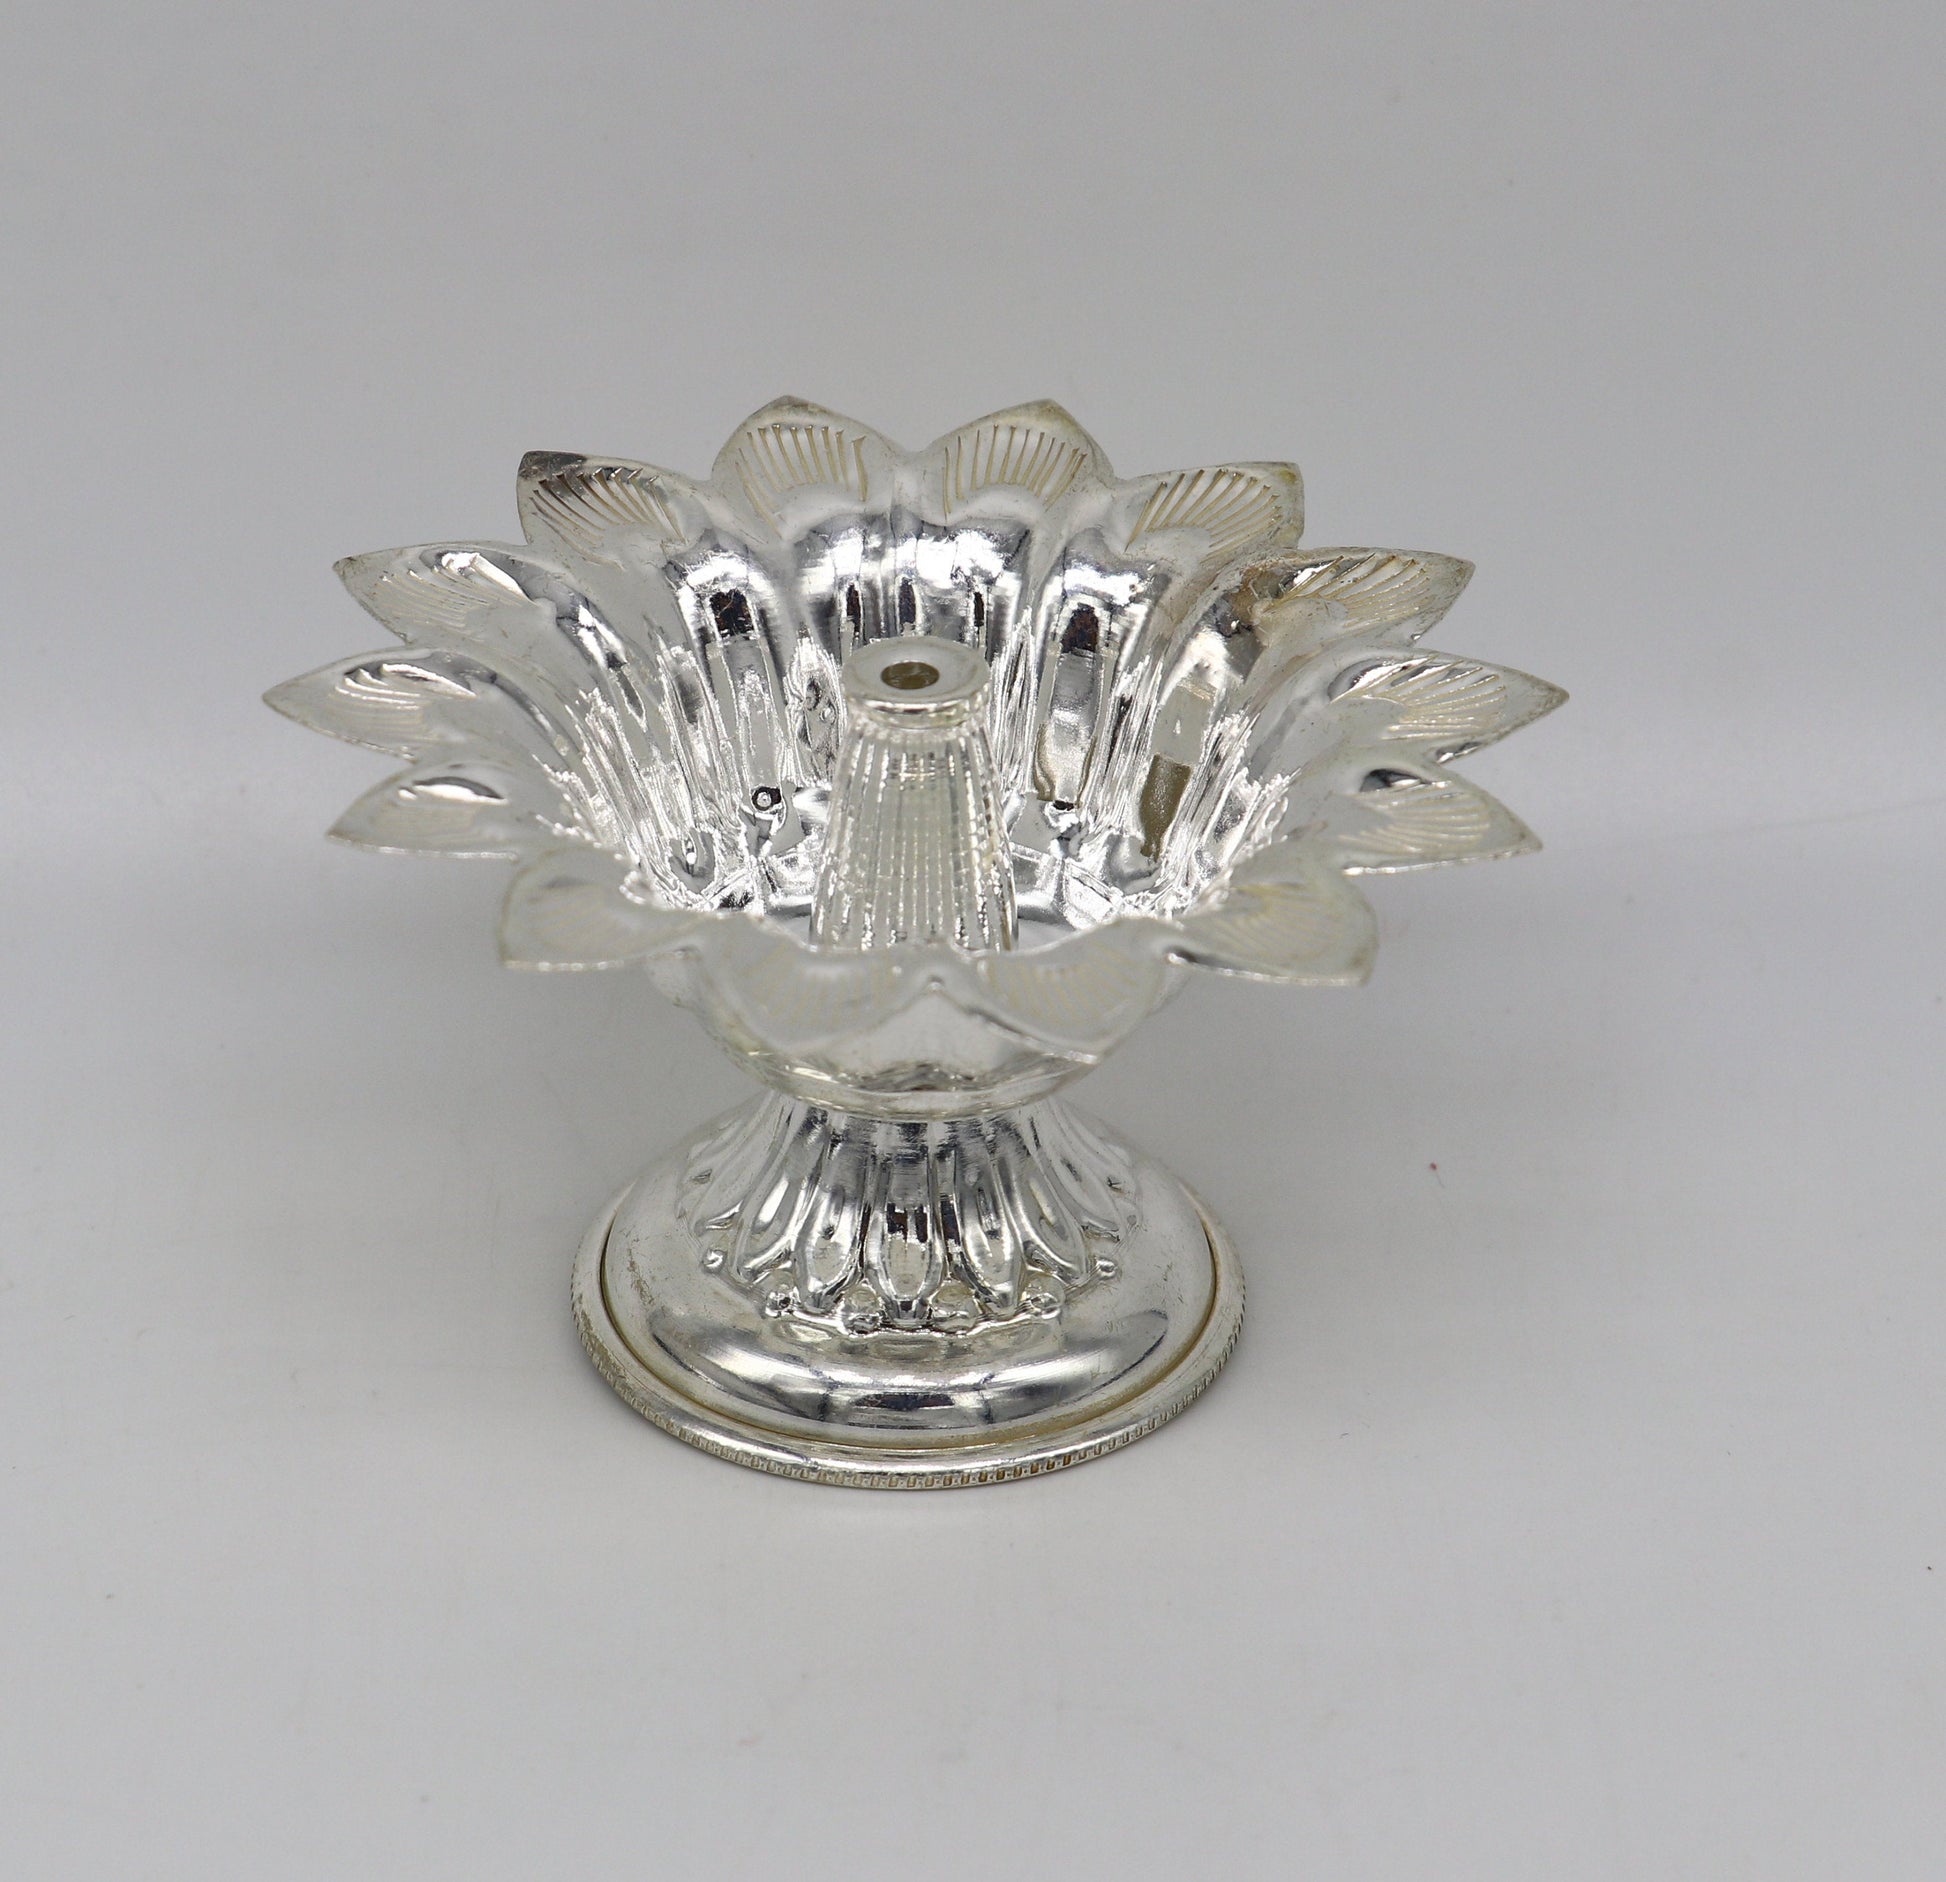 Fine 999 silver handmade flower shape oil lamp, silver temple utensils, silver diya, deepak, silver vessels, silver art decorative art su174 - TRIBAL ORNAMENTS